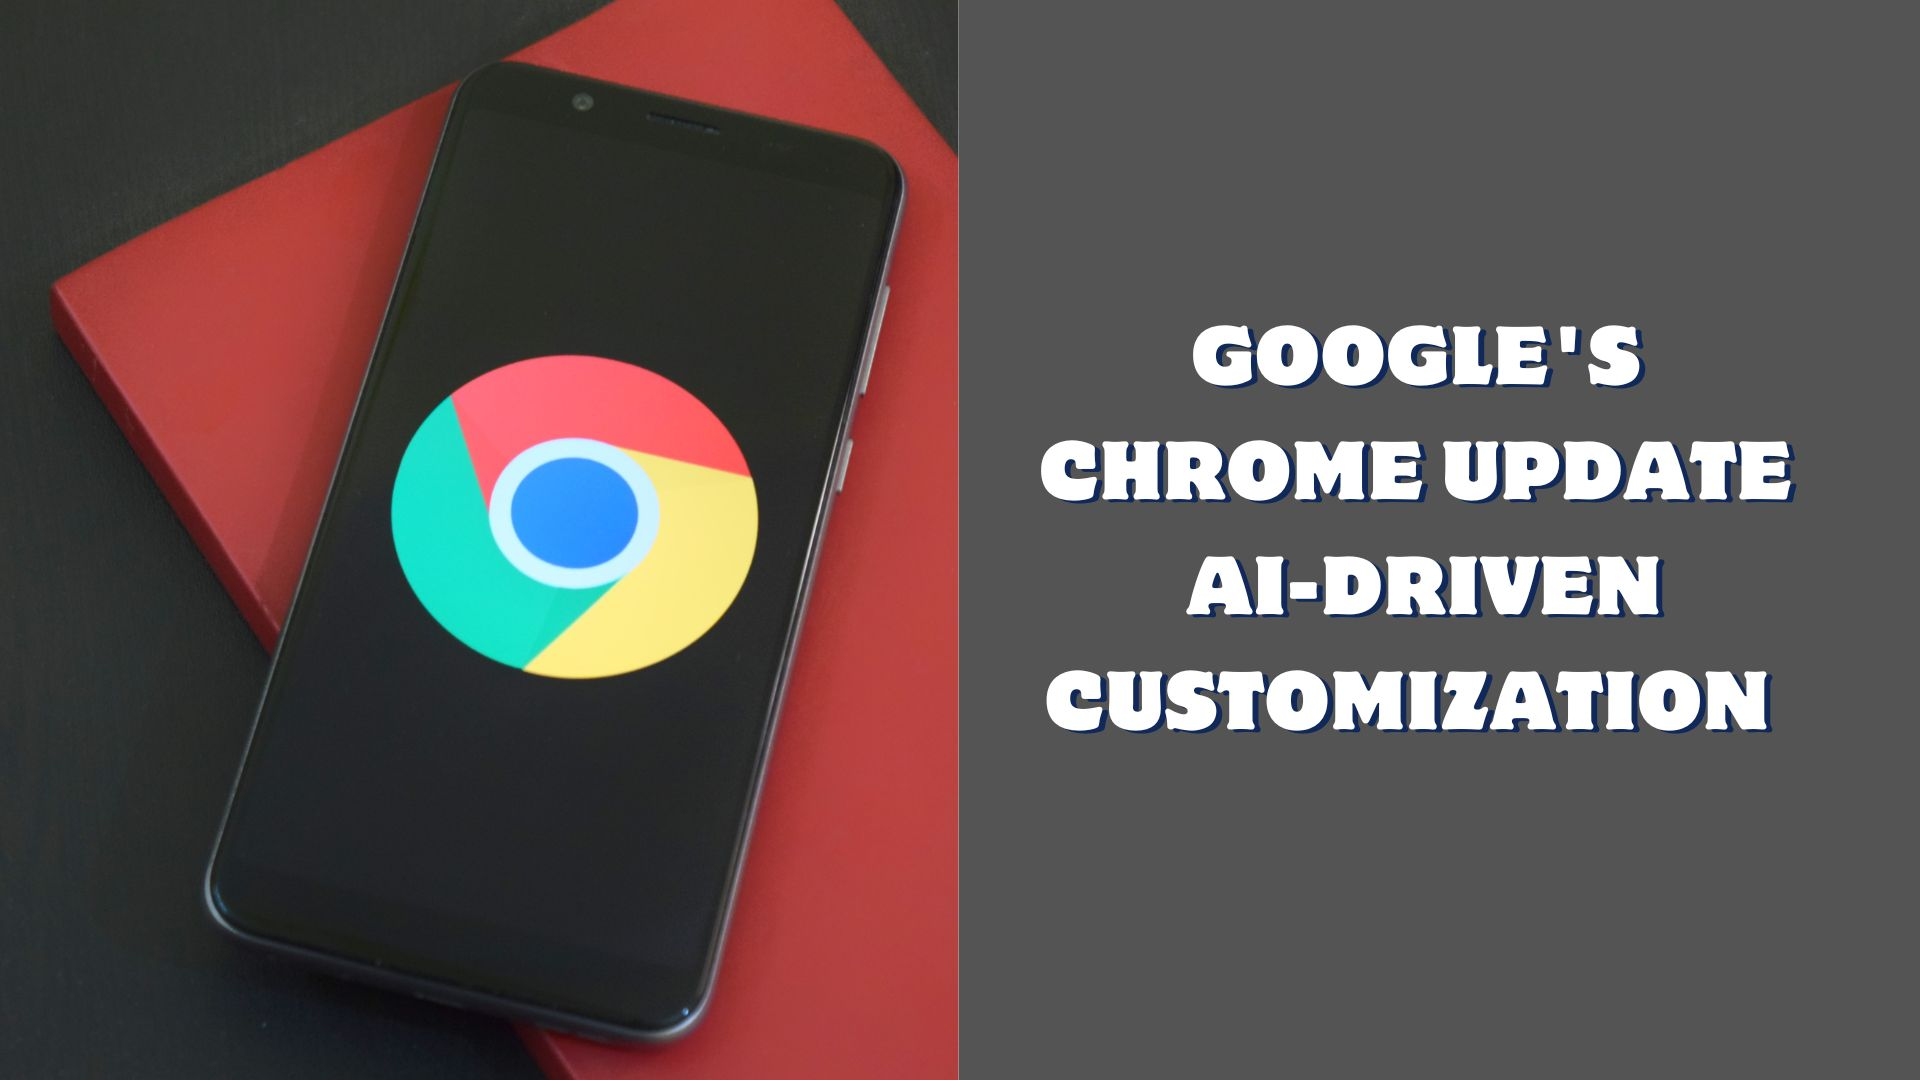 Google-Chrome-Update-image